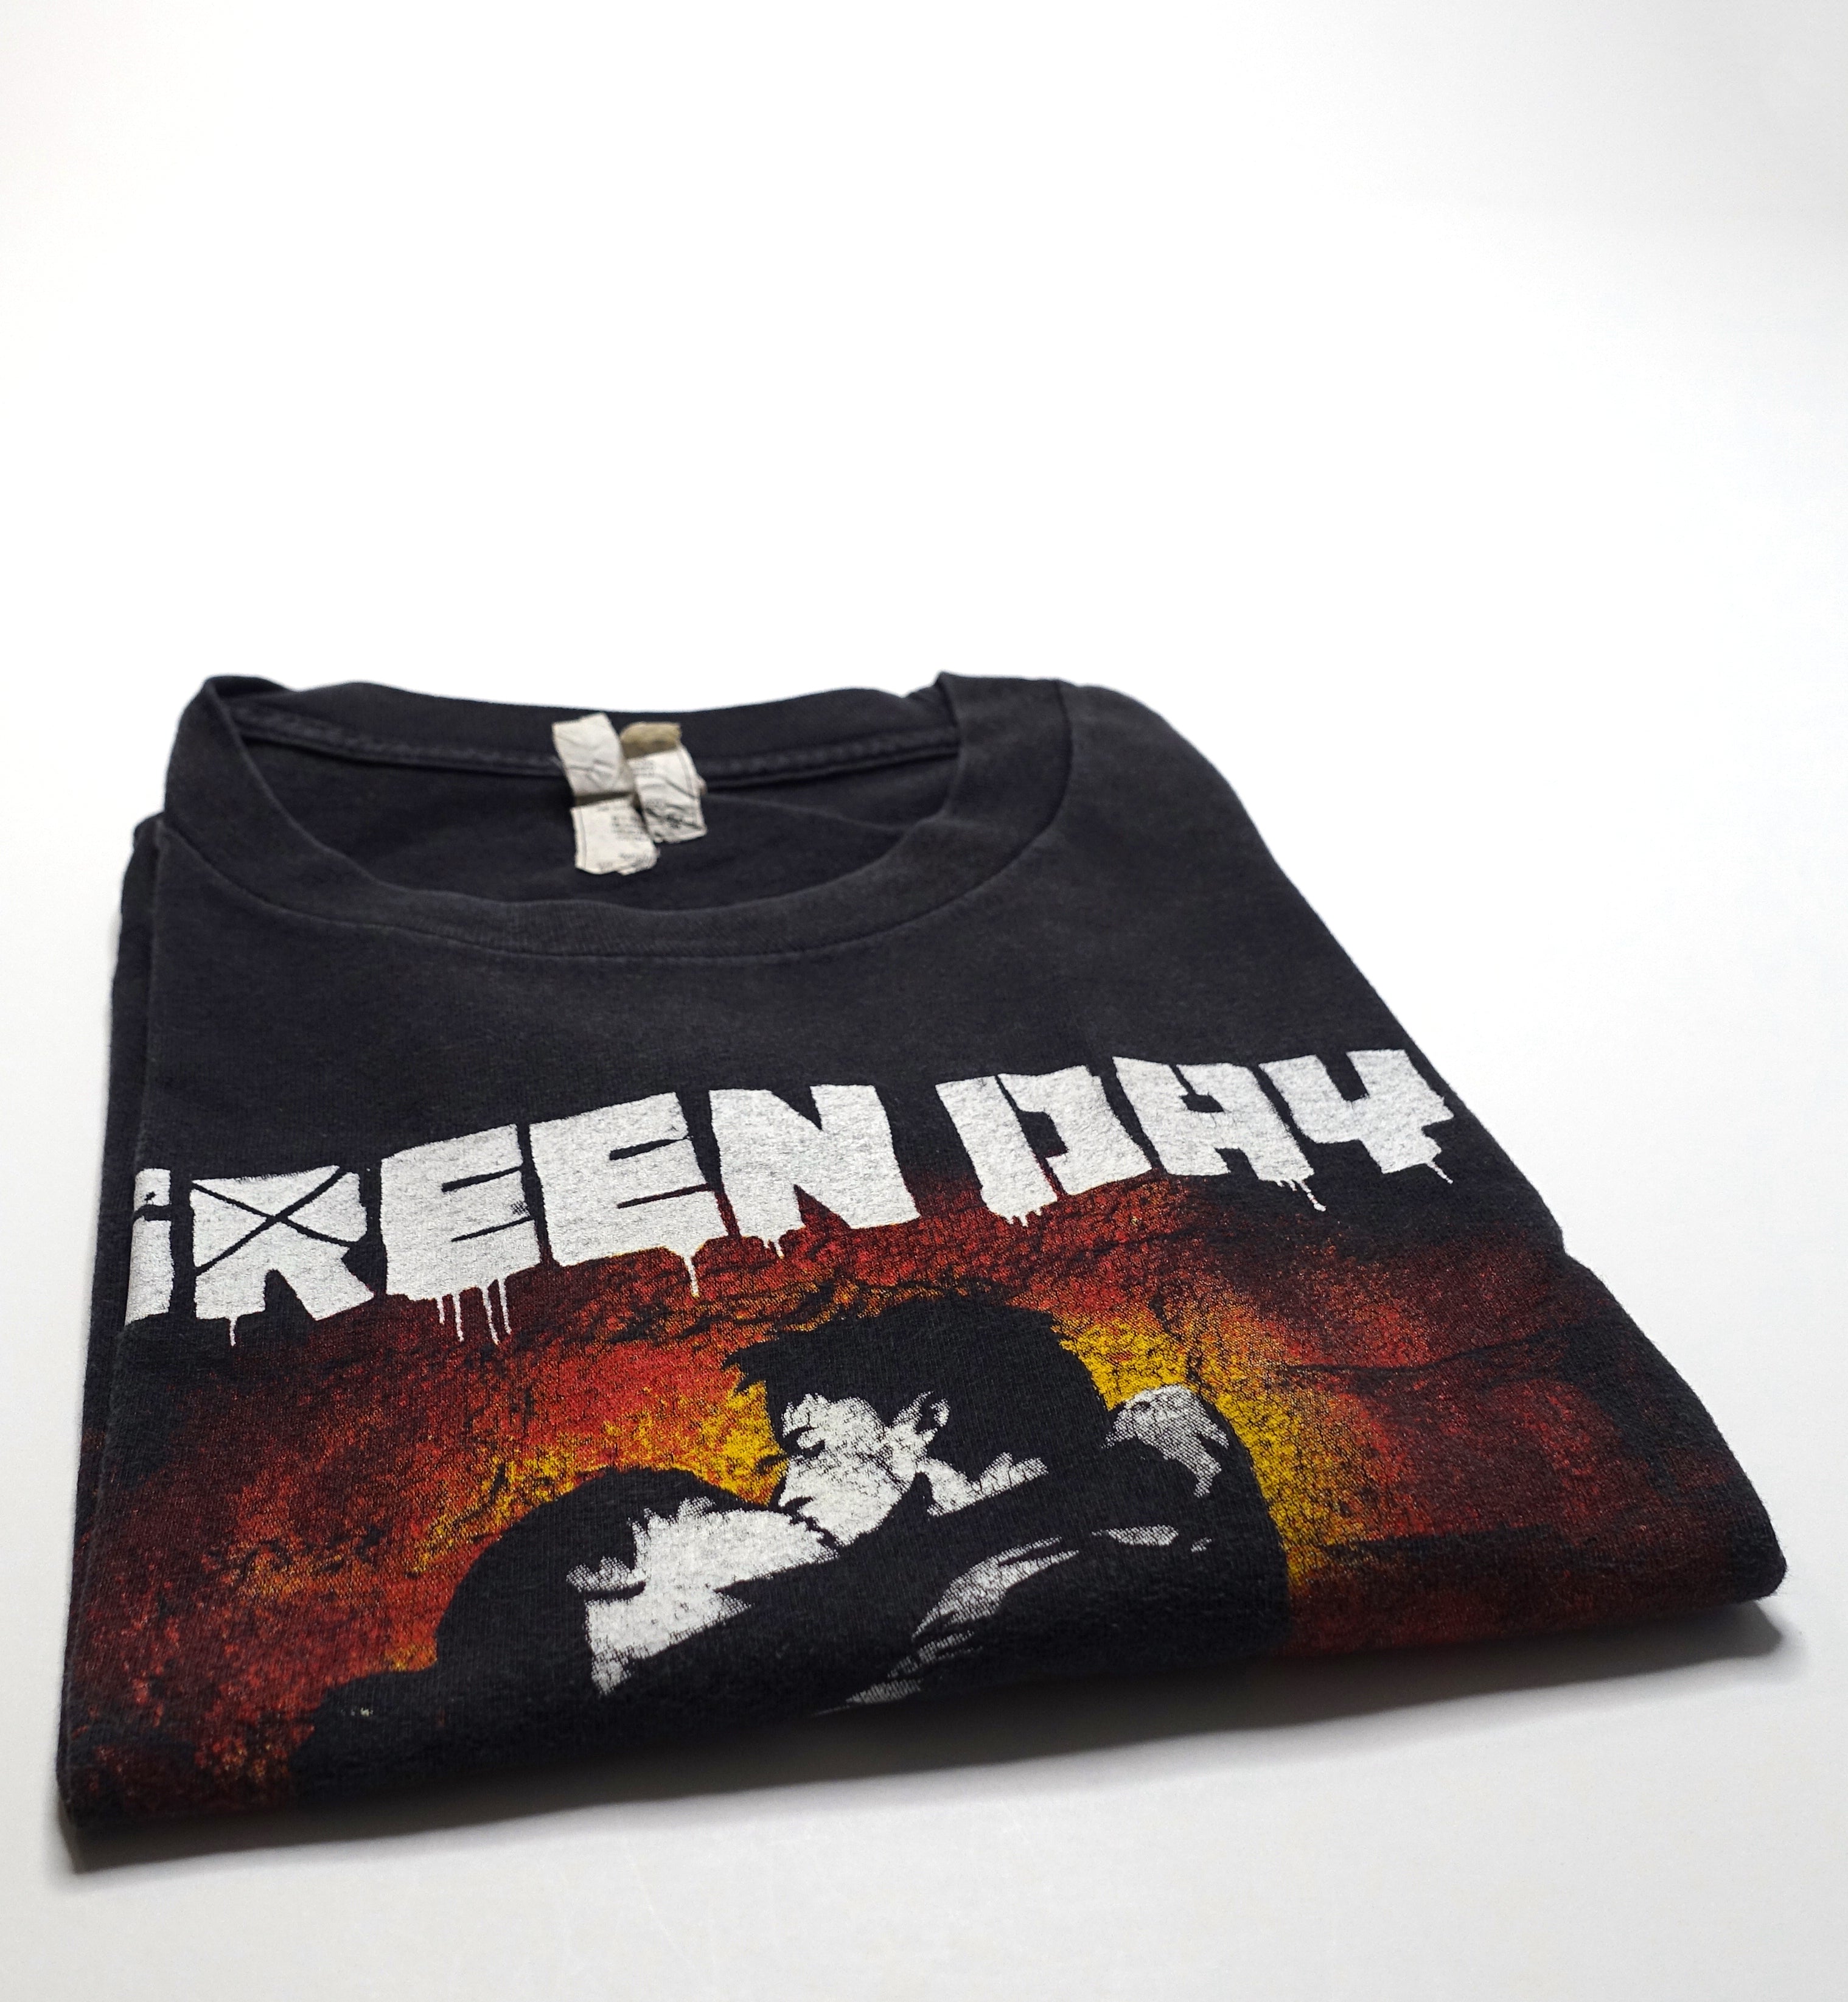 Green Day - 21st Century Breakdown 2009 Tour Shirt Size XL